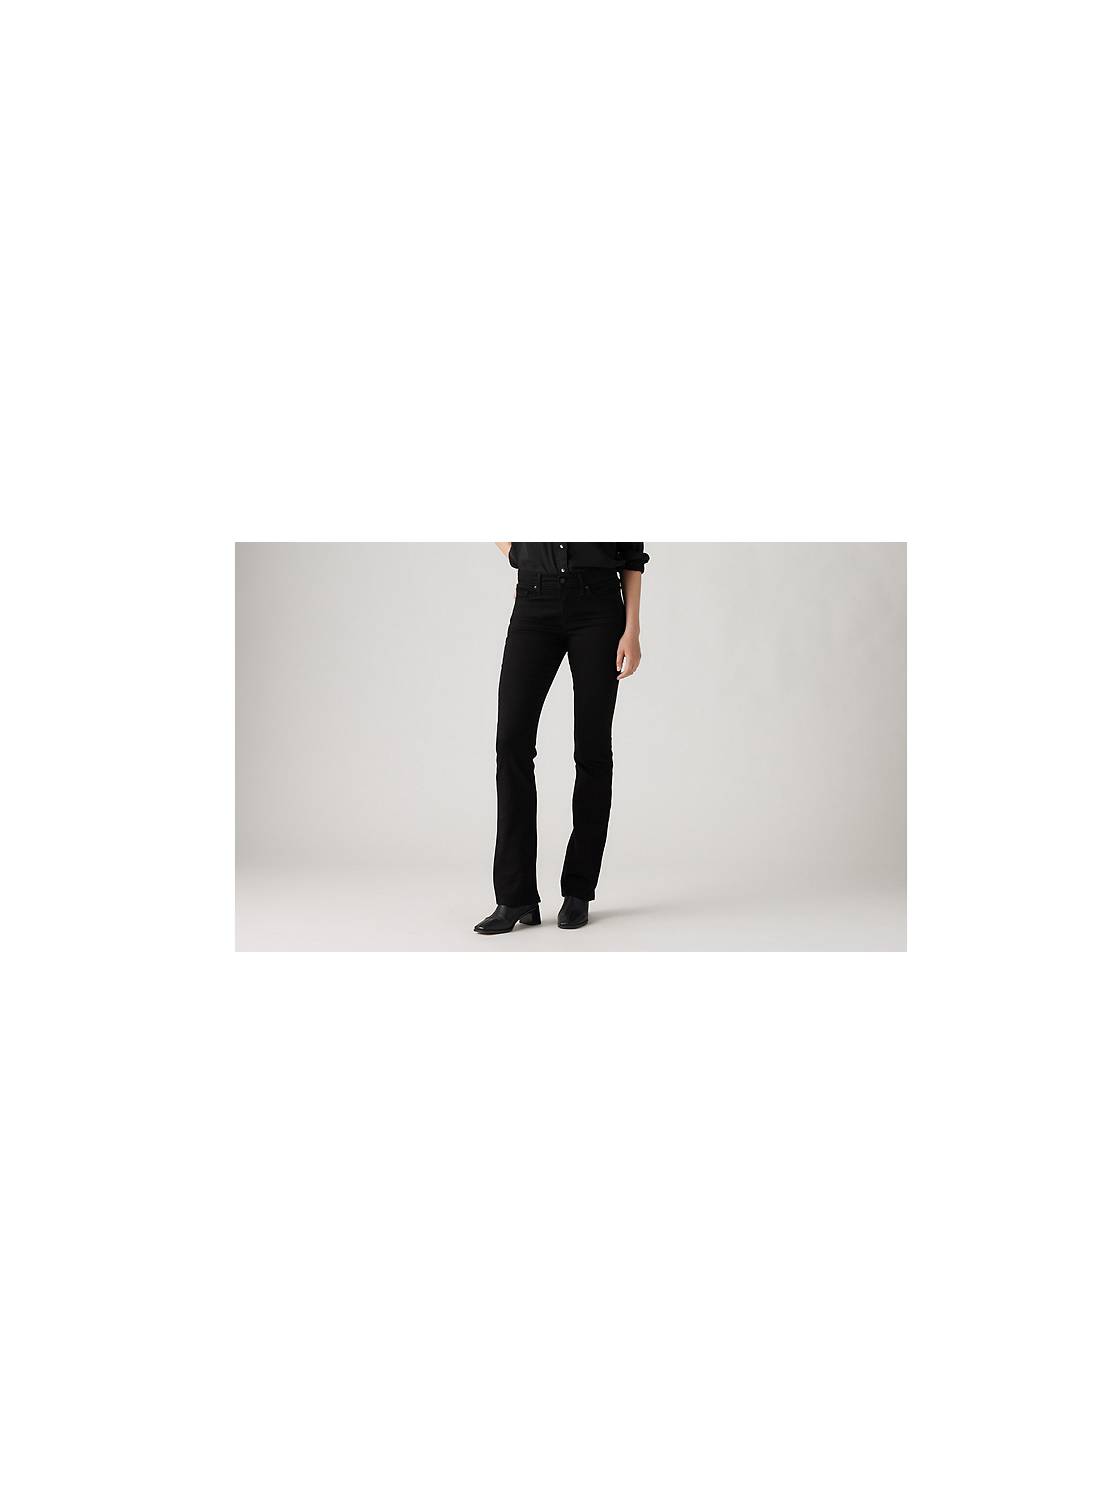 Women's Boot Cut Performance Formal Dress Pant - Black - CK182832L90